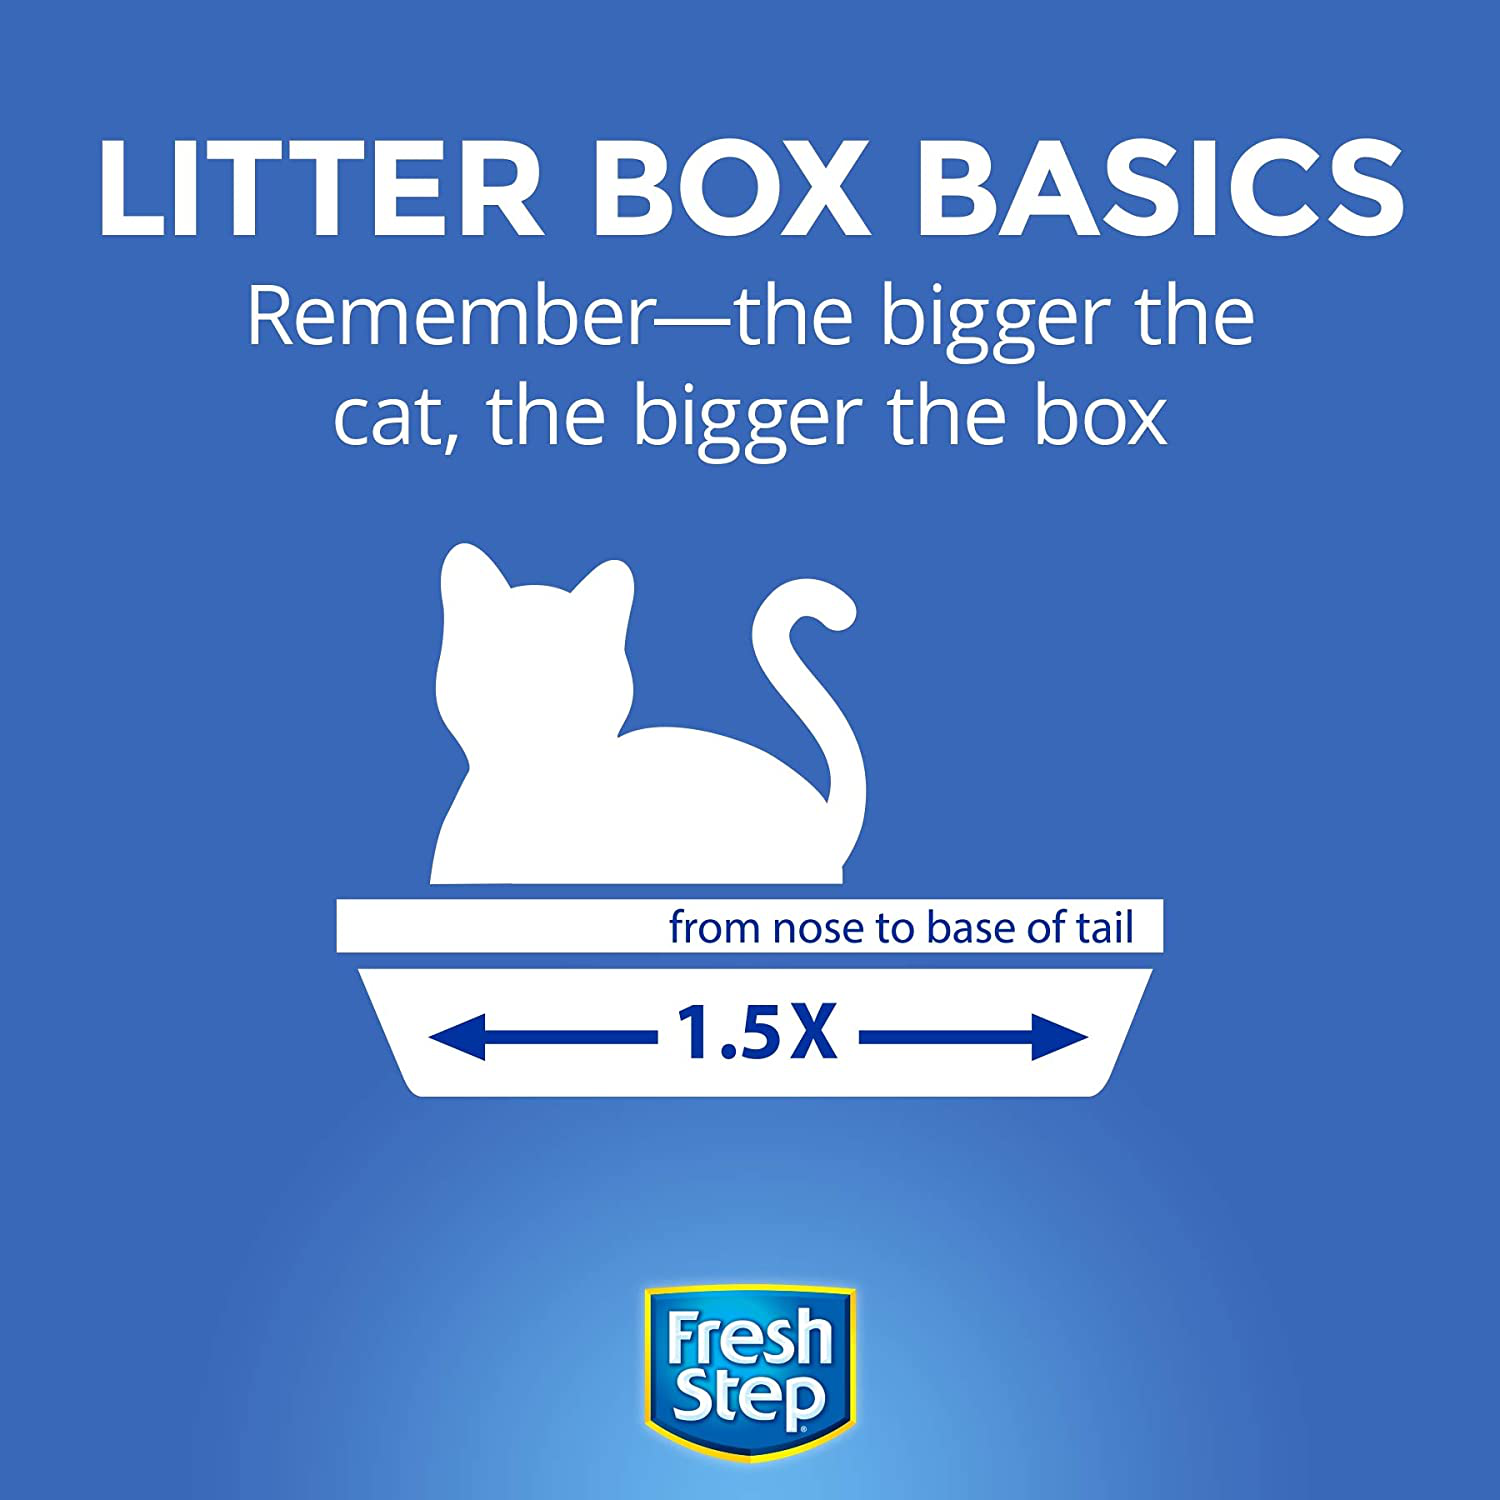 Fresh Step Multi-Cat Litter, Scented with Febreze, 25 Lb Animals & Pet Supplies > Pet Supplies > Cat Supplies > Cat Litter Fresh Step   